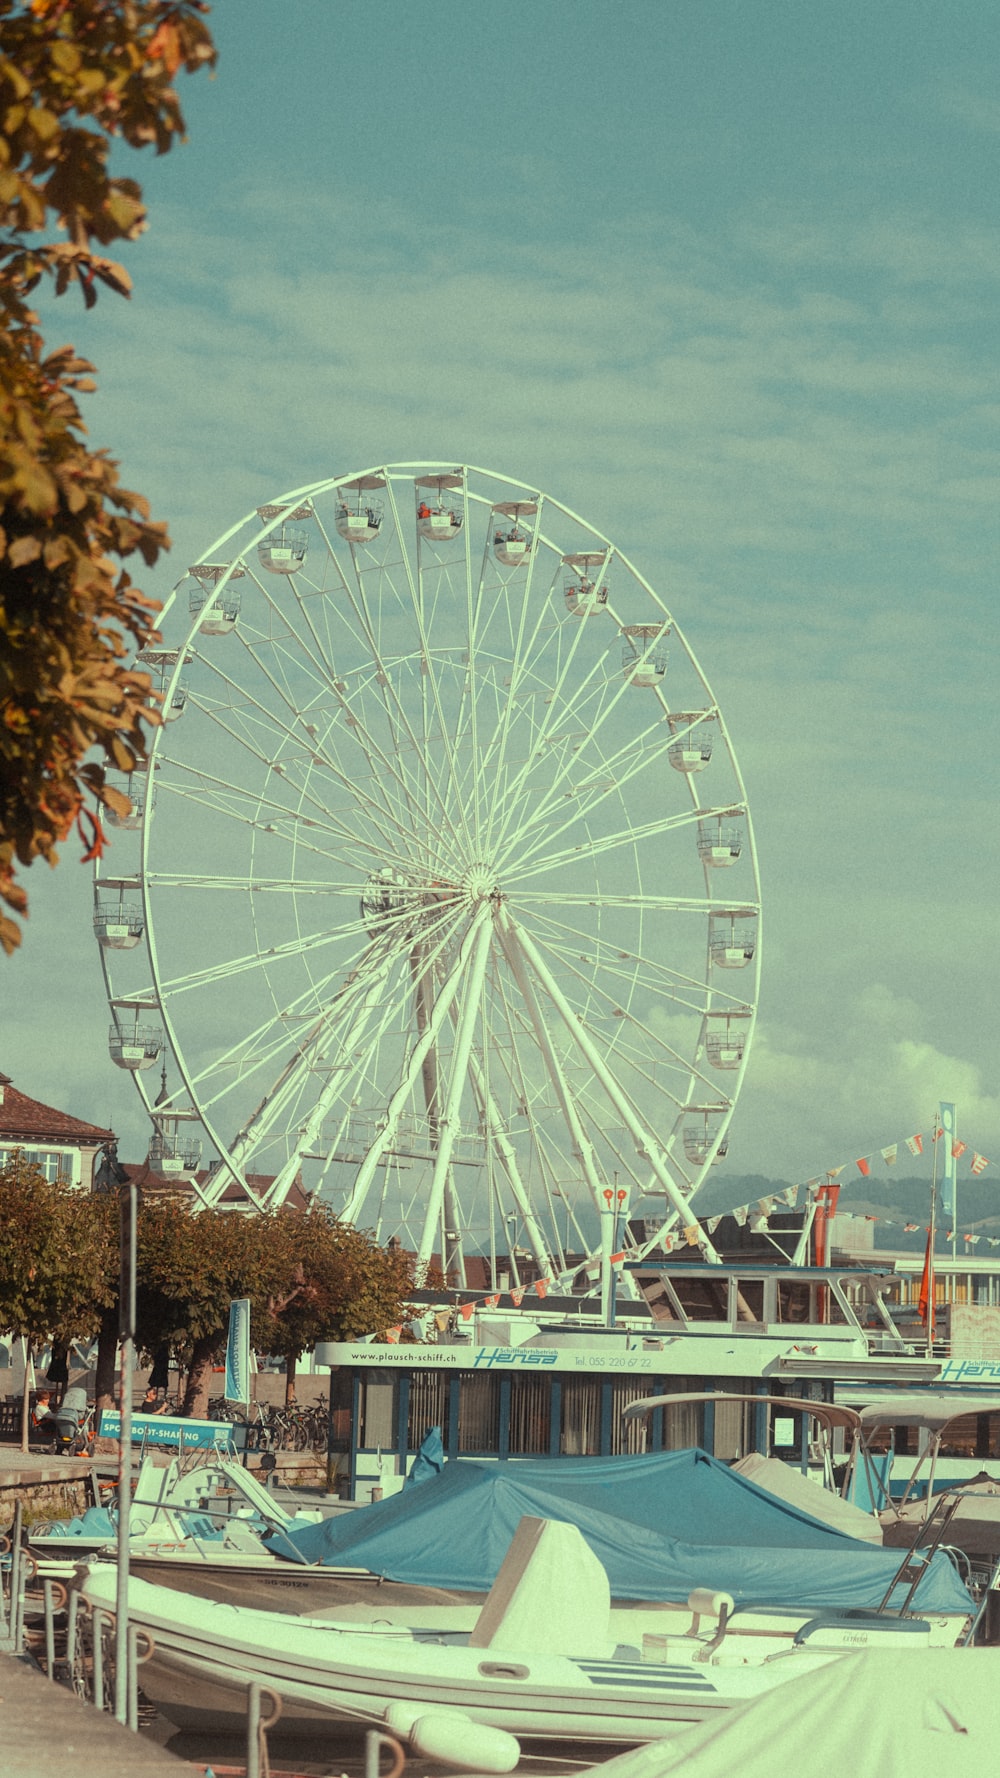 a ferris wheel sitting on top of a pier